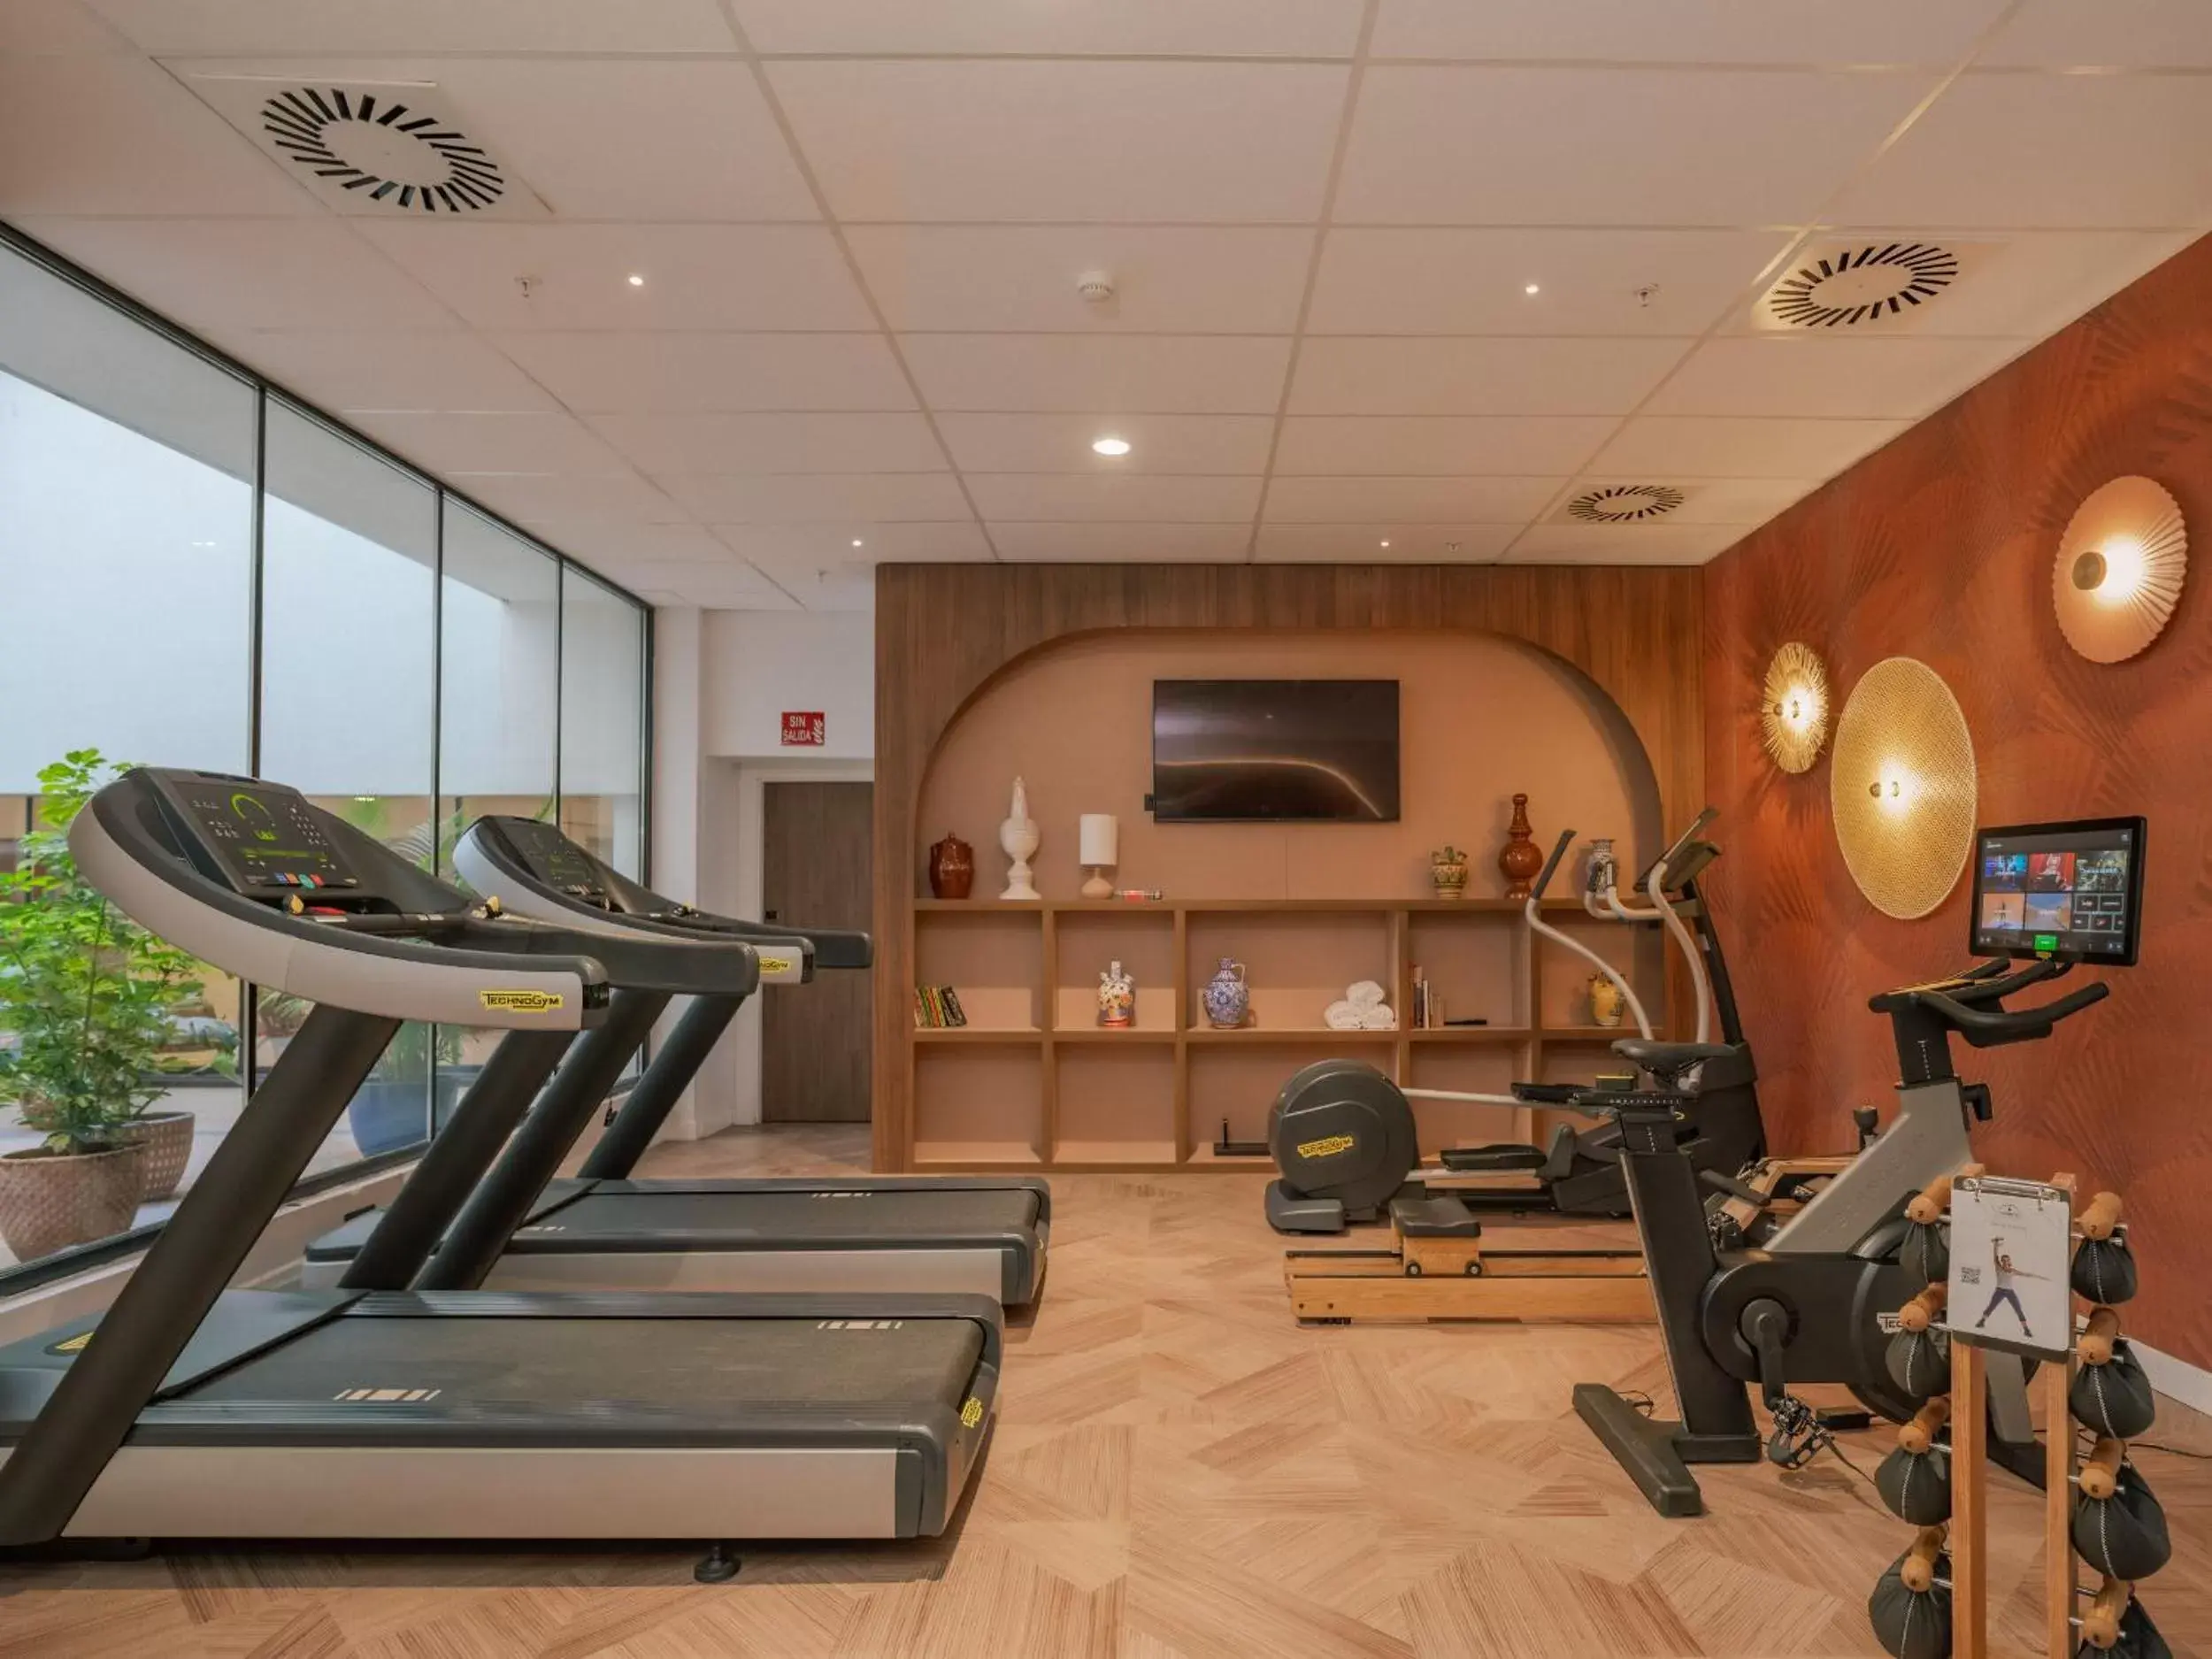 Fitness centre/facilities, Fitness Center/Facilities in Ibis Styles Sevilla City Santa Justa